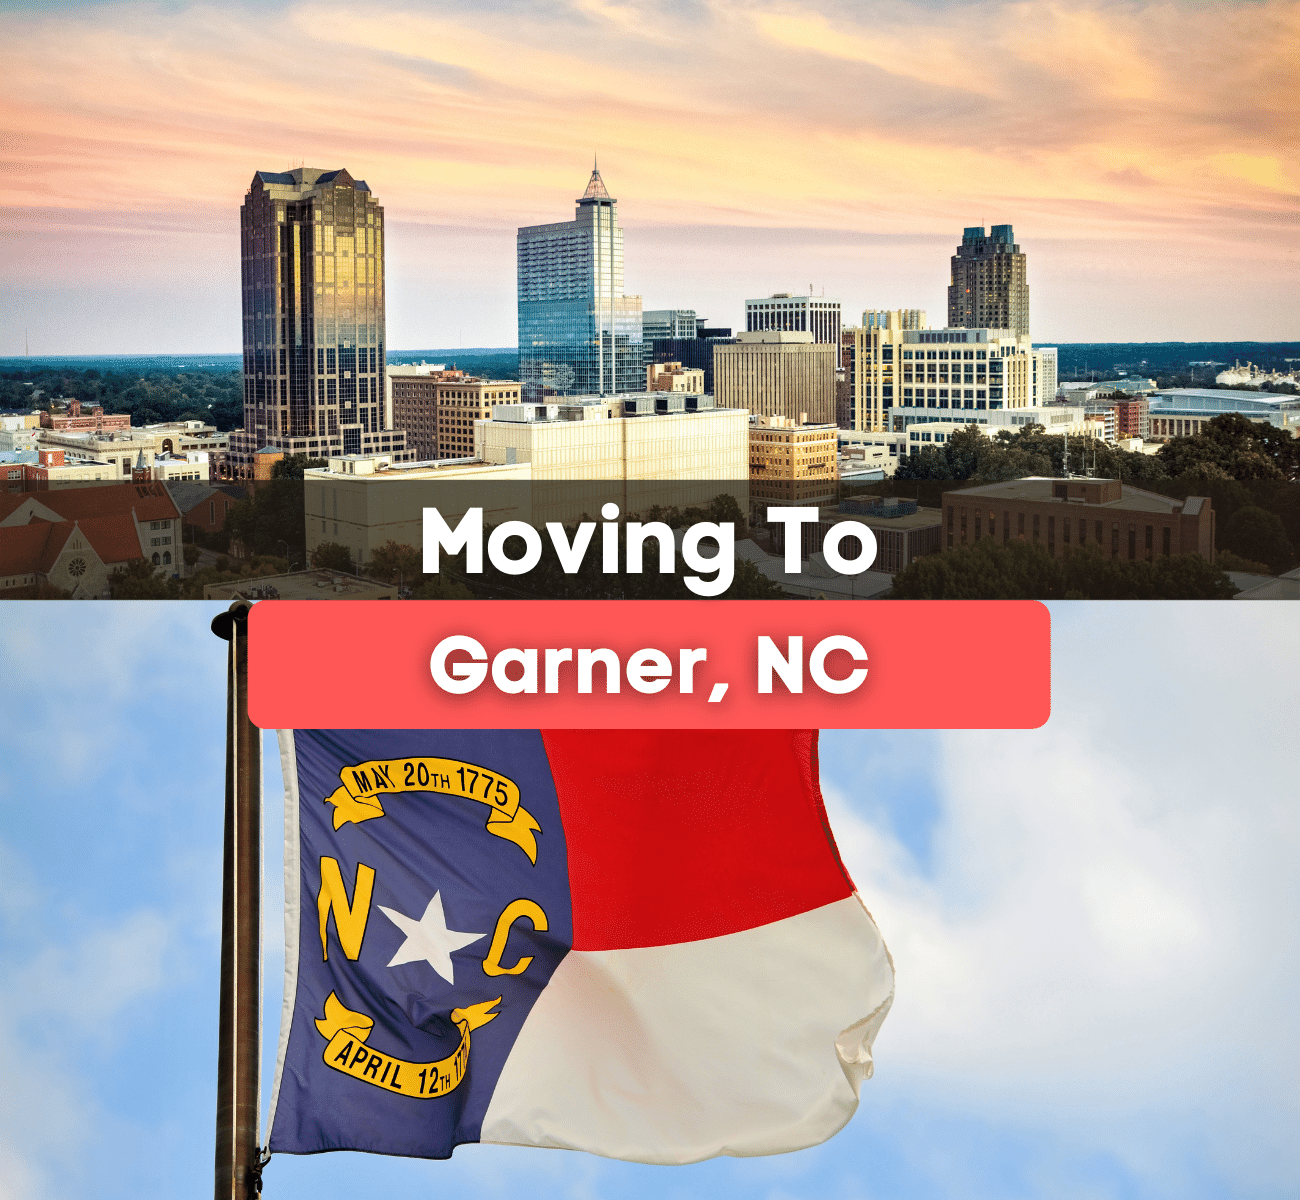 Moving to Garner, NC - what is it like living in Garner?